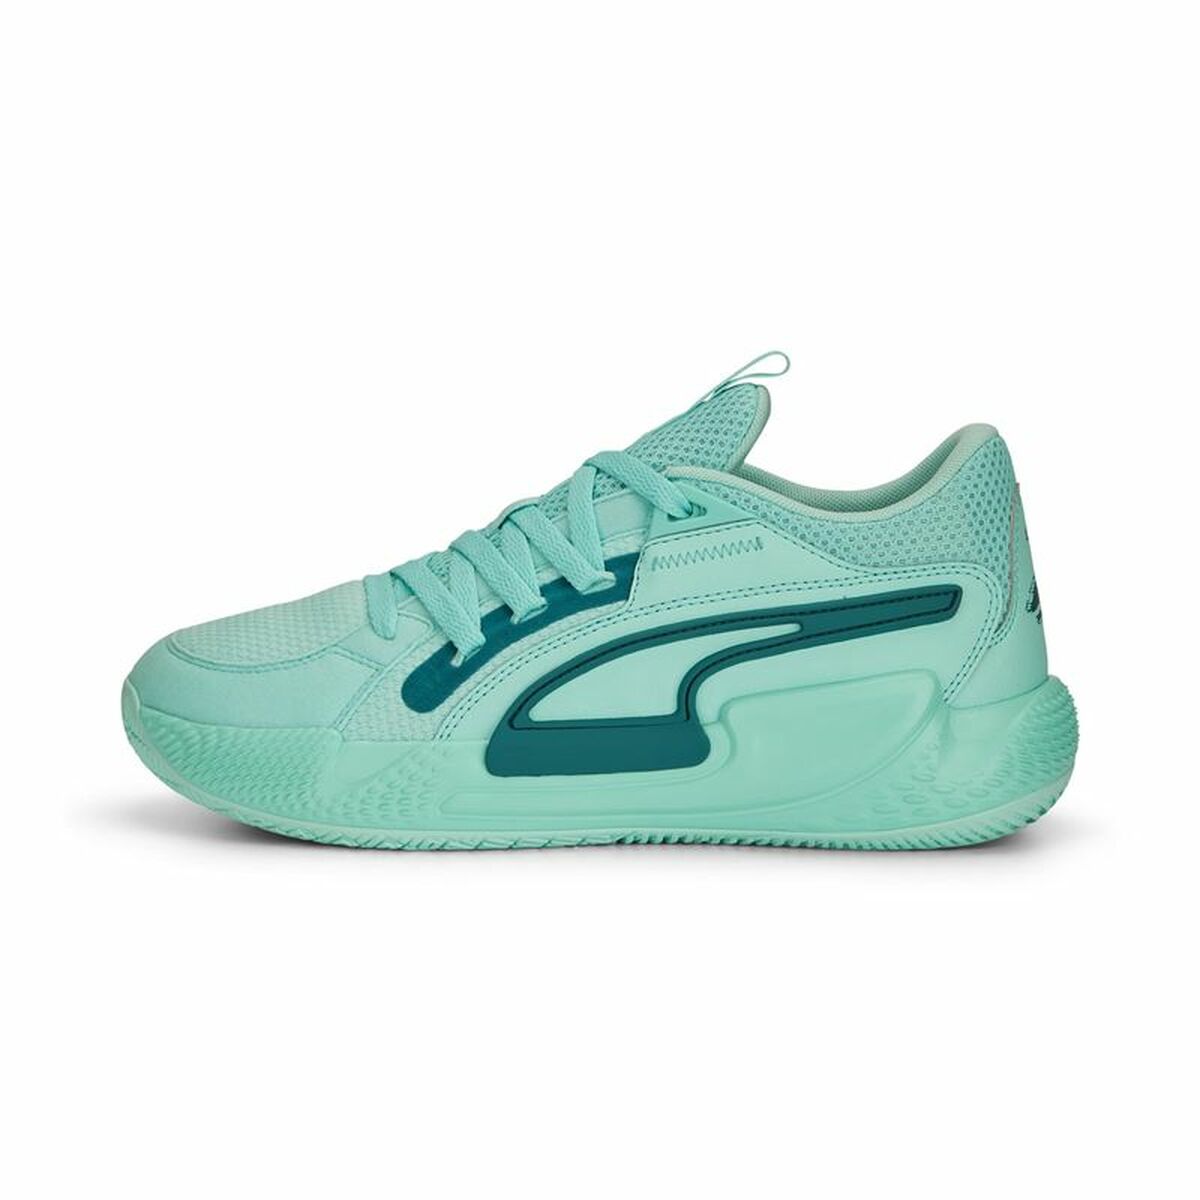 Basketball Shoes for Adults Puma Court Rider Chaos Sl Aquamarine